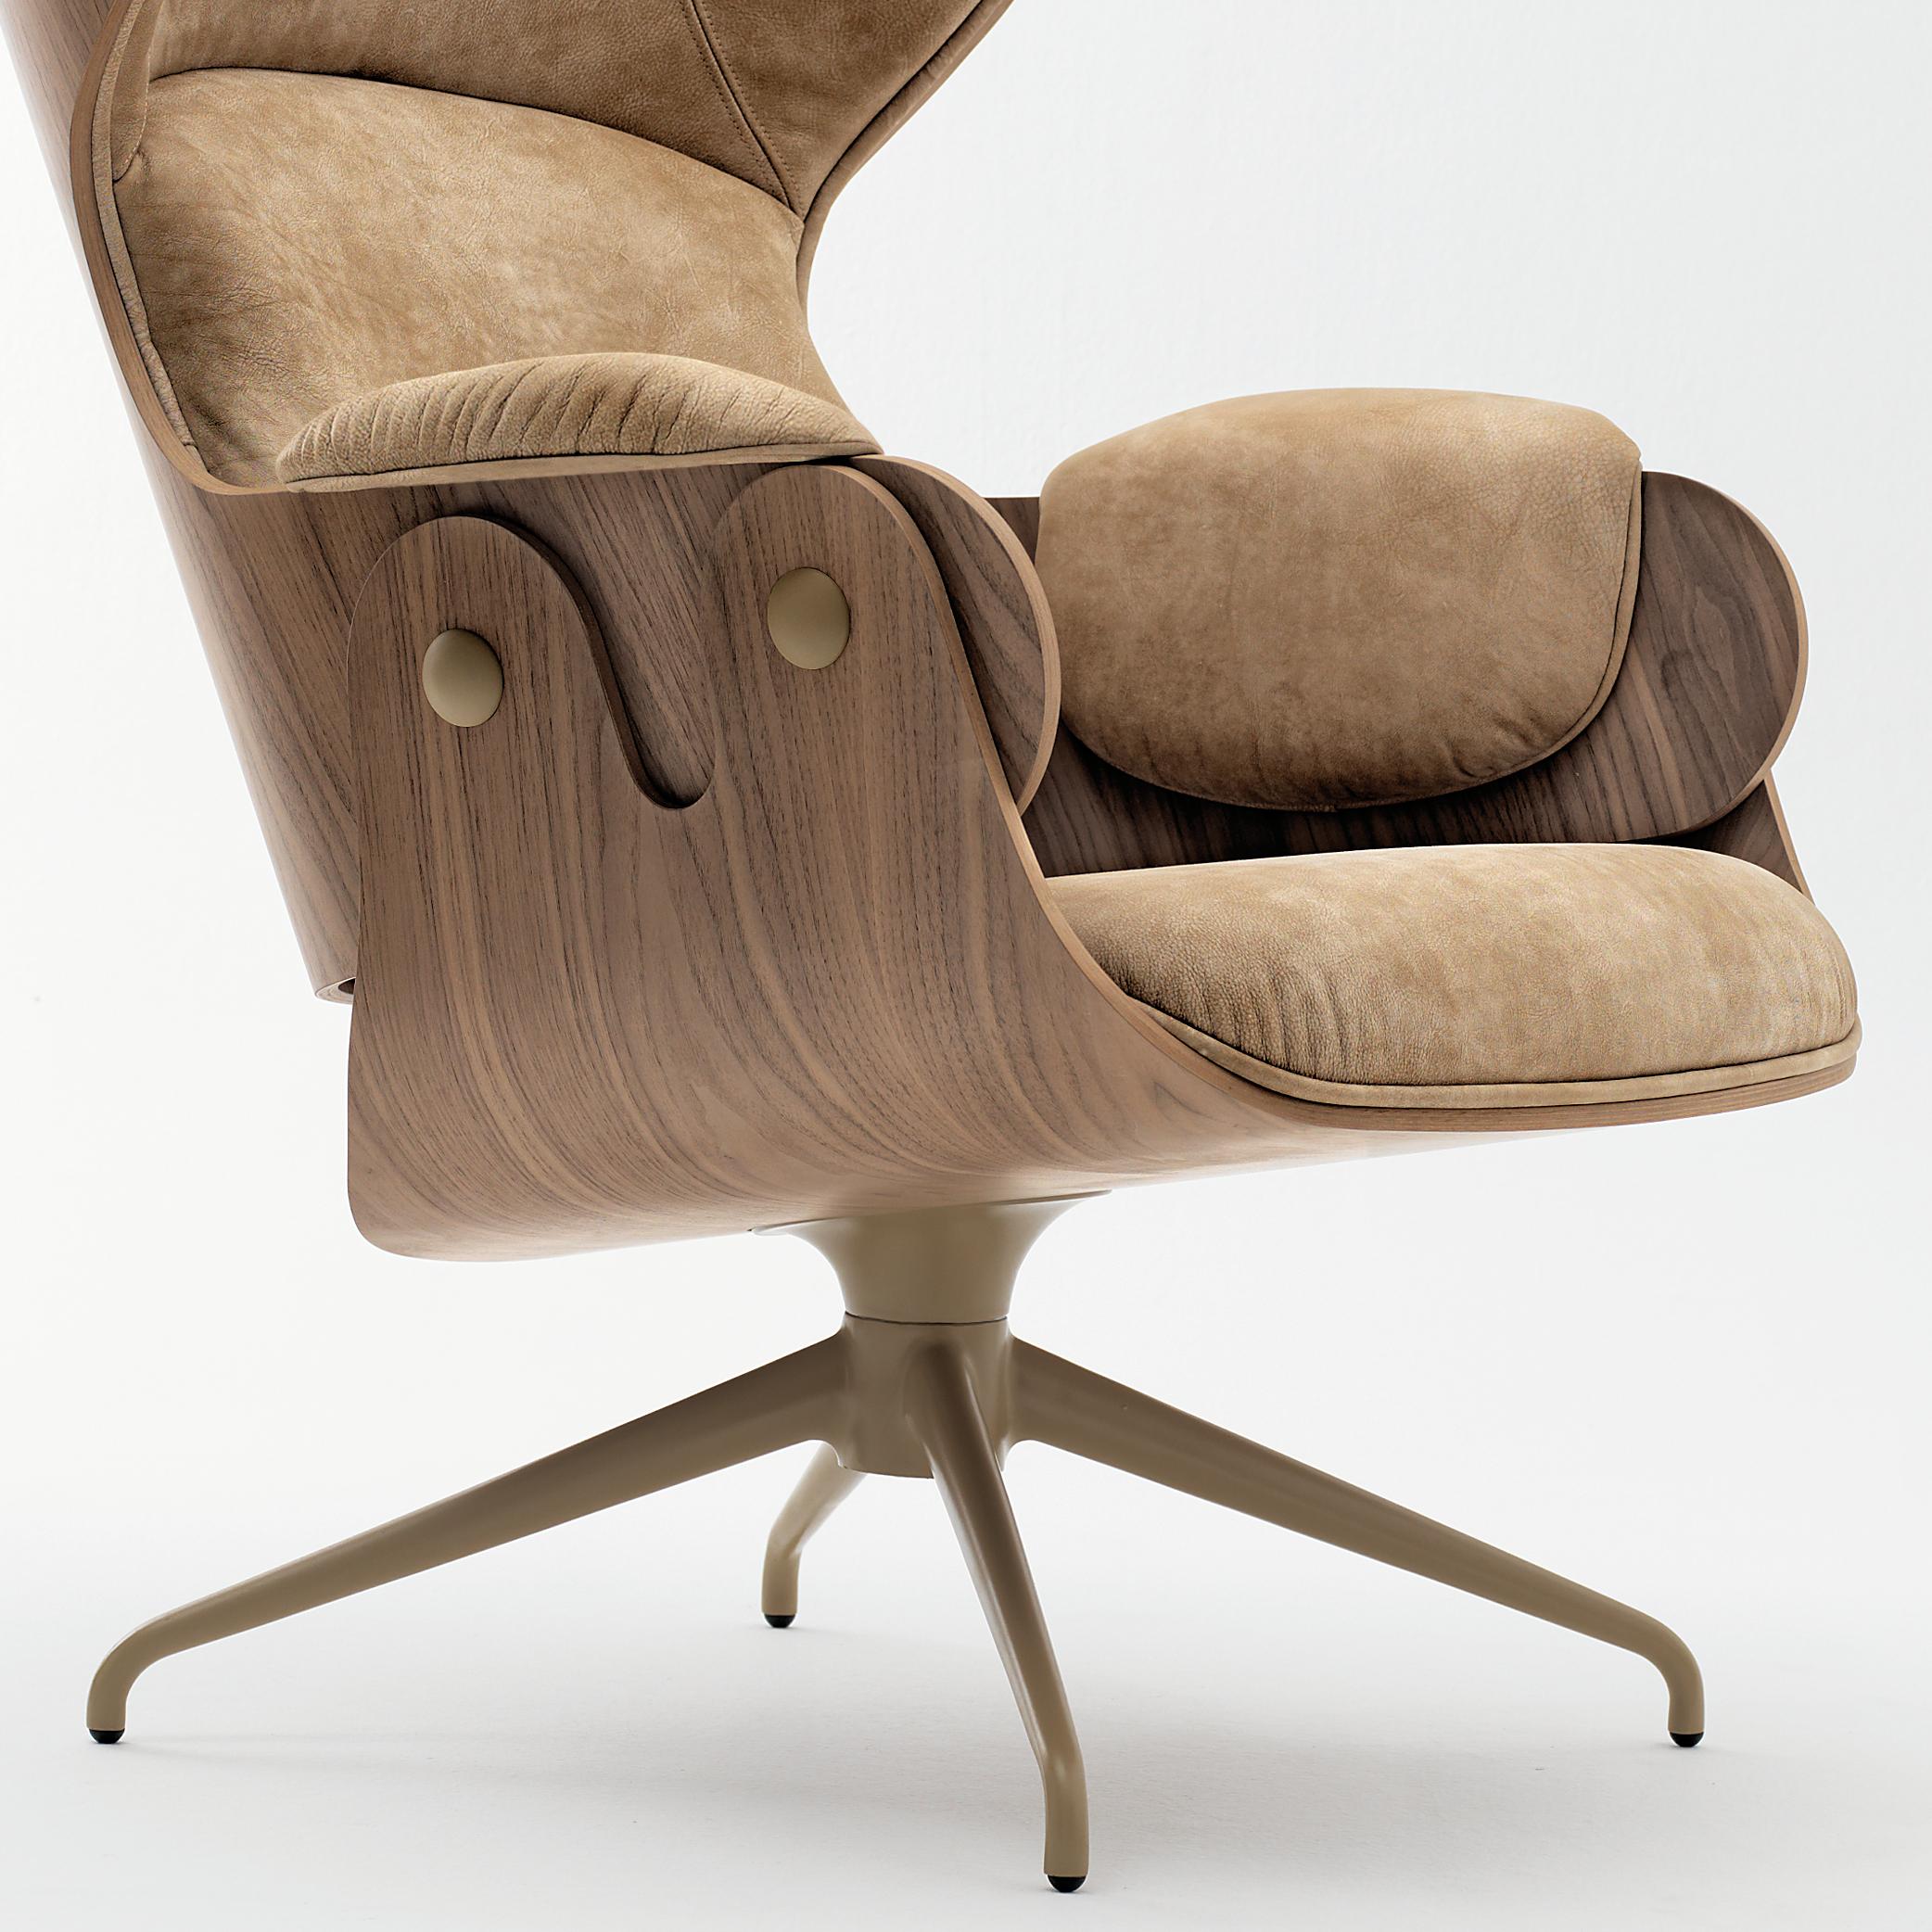 Aluminum Jaime Hayon, Contemporary, Plywood Walnut Leather Upholstery Lounger Armchair